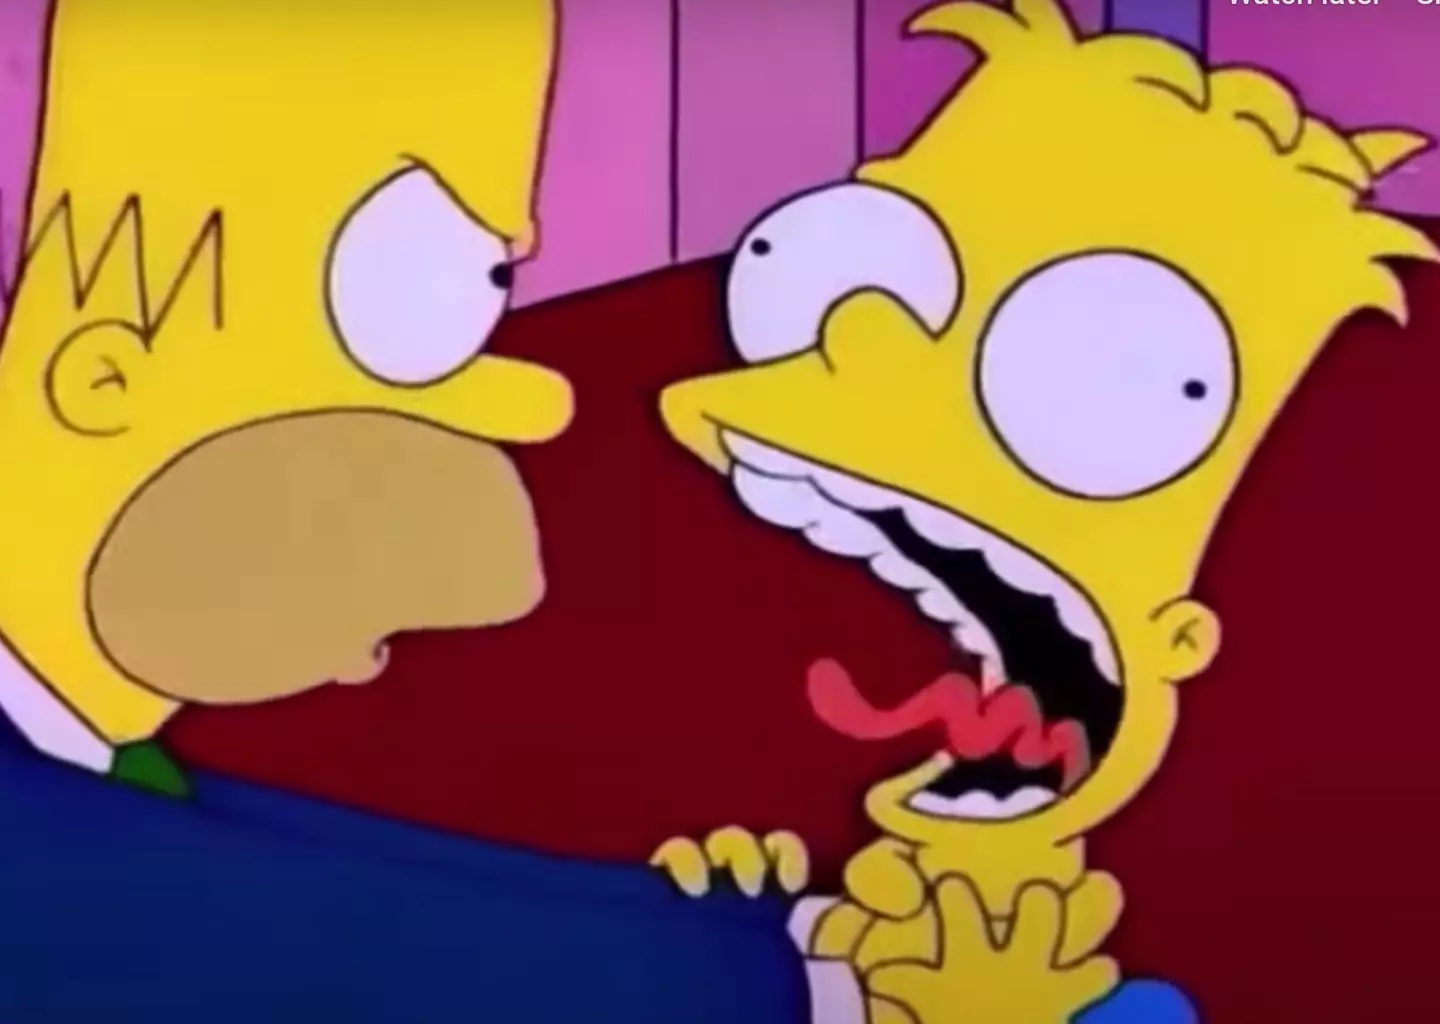 Fans hadn’t seen Homer strangle Bart on screen since the 31st season.